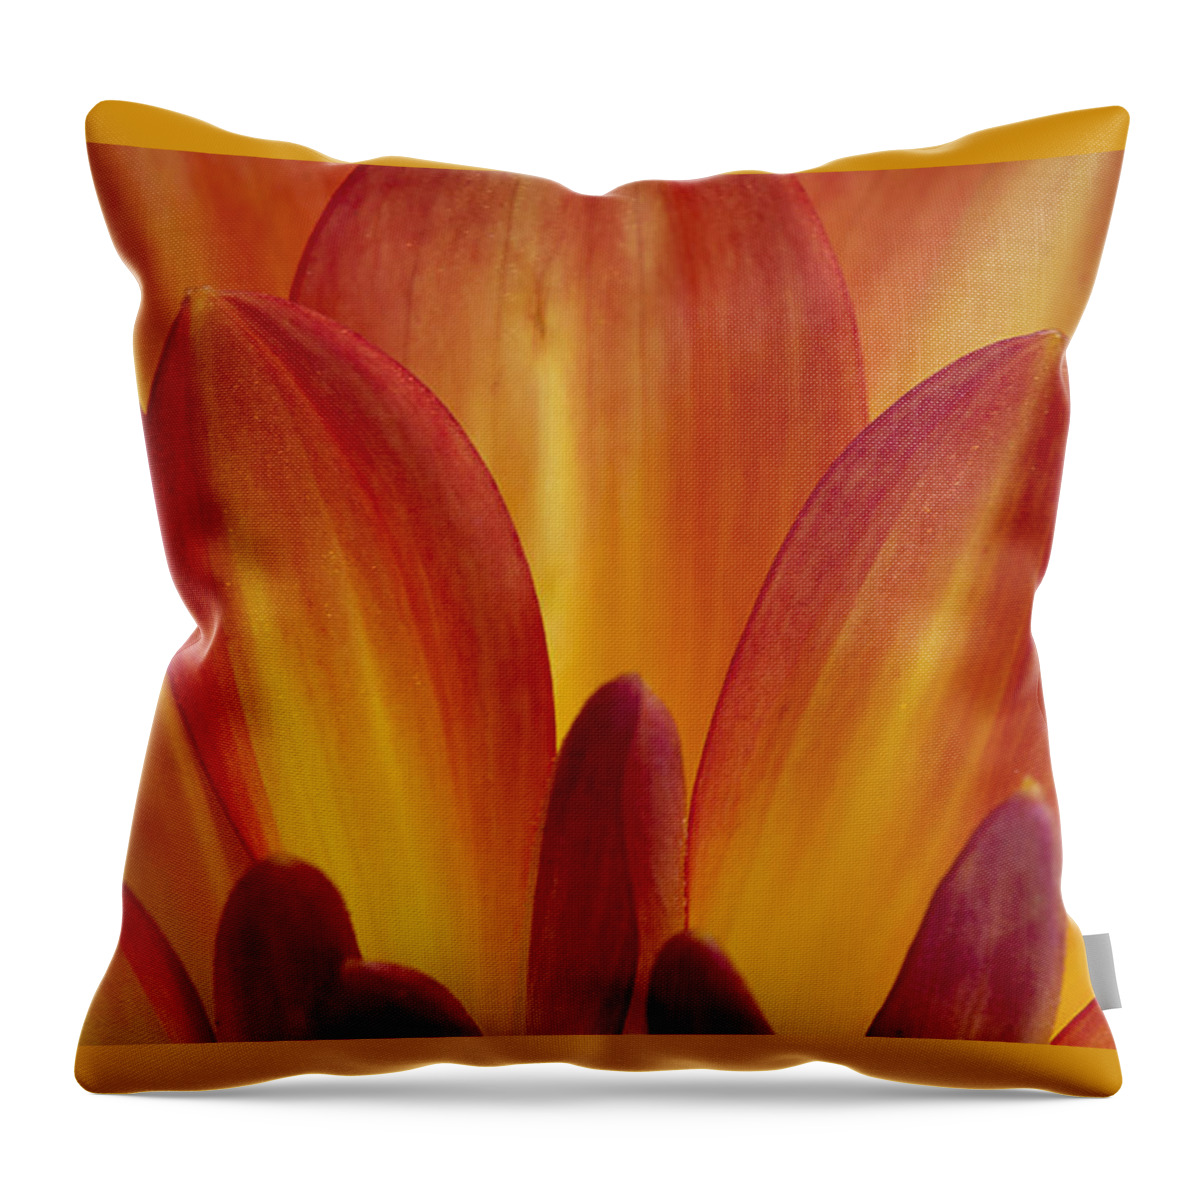 Orange Throw Pillow featuring the photograph Orange Dahlia Petals by Morgan Wright